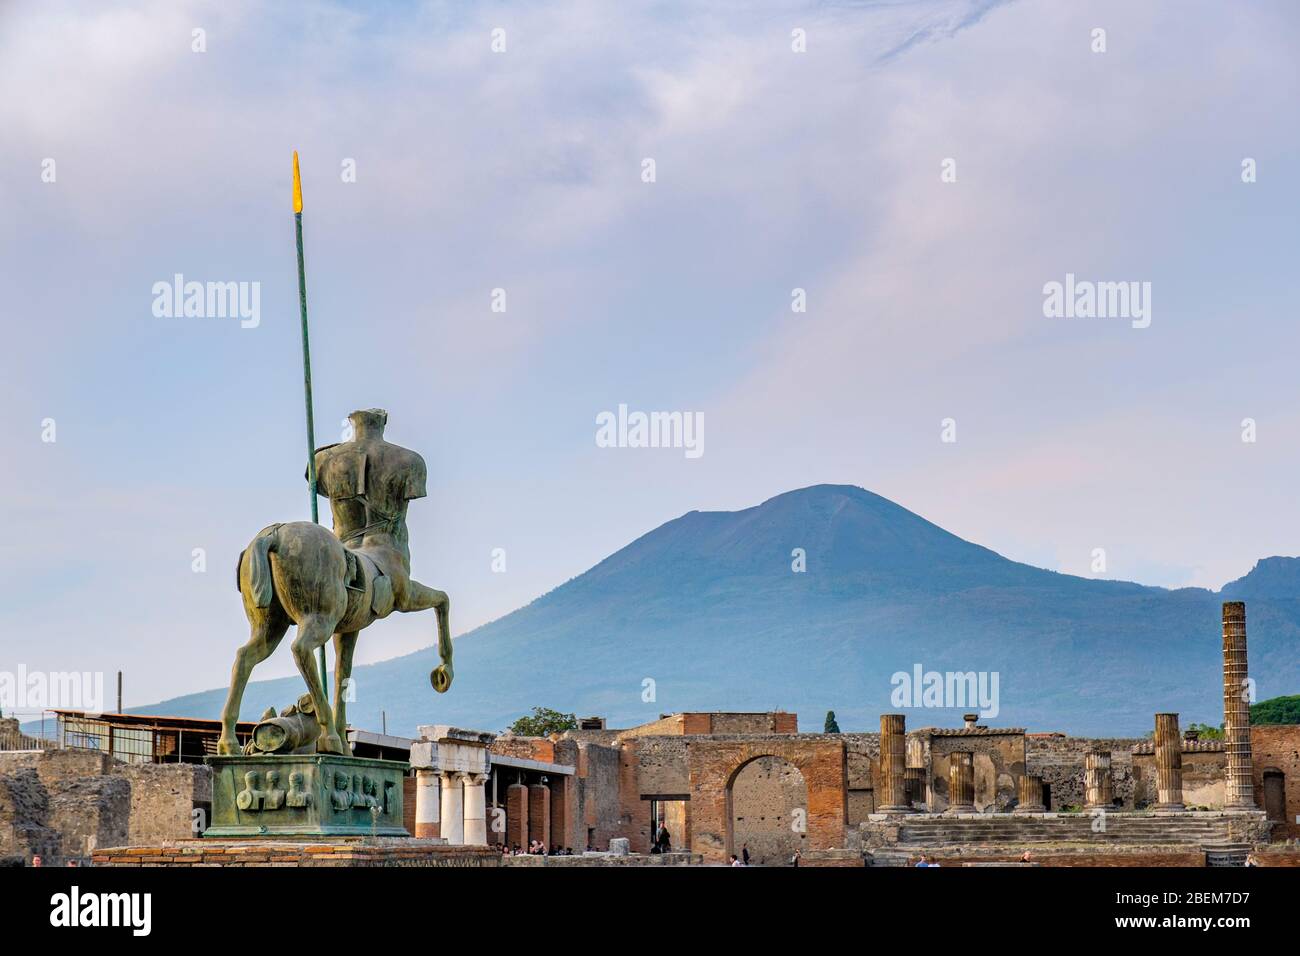 Ruinas de Pompeya, Foro de Pompeya - Centauro, estatua de bronce de Igor Motoraj, Monte Vesubio en el fondo, antigua ciudad de Pompeya, Italia, Europa. Foto de stock